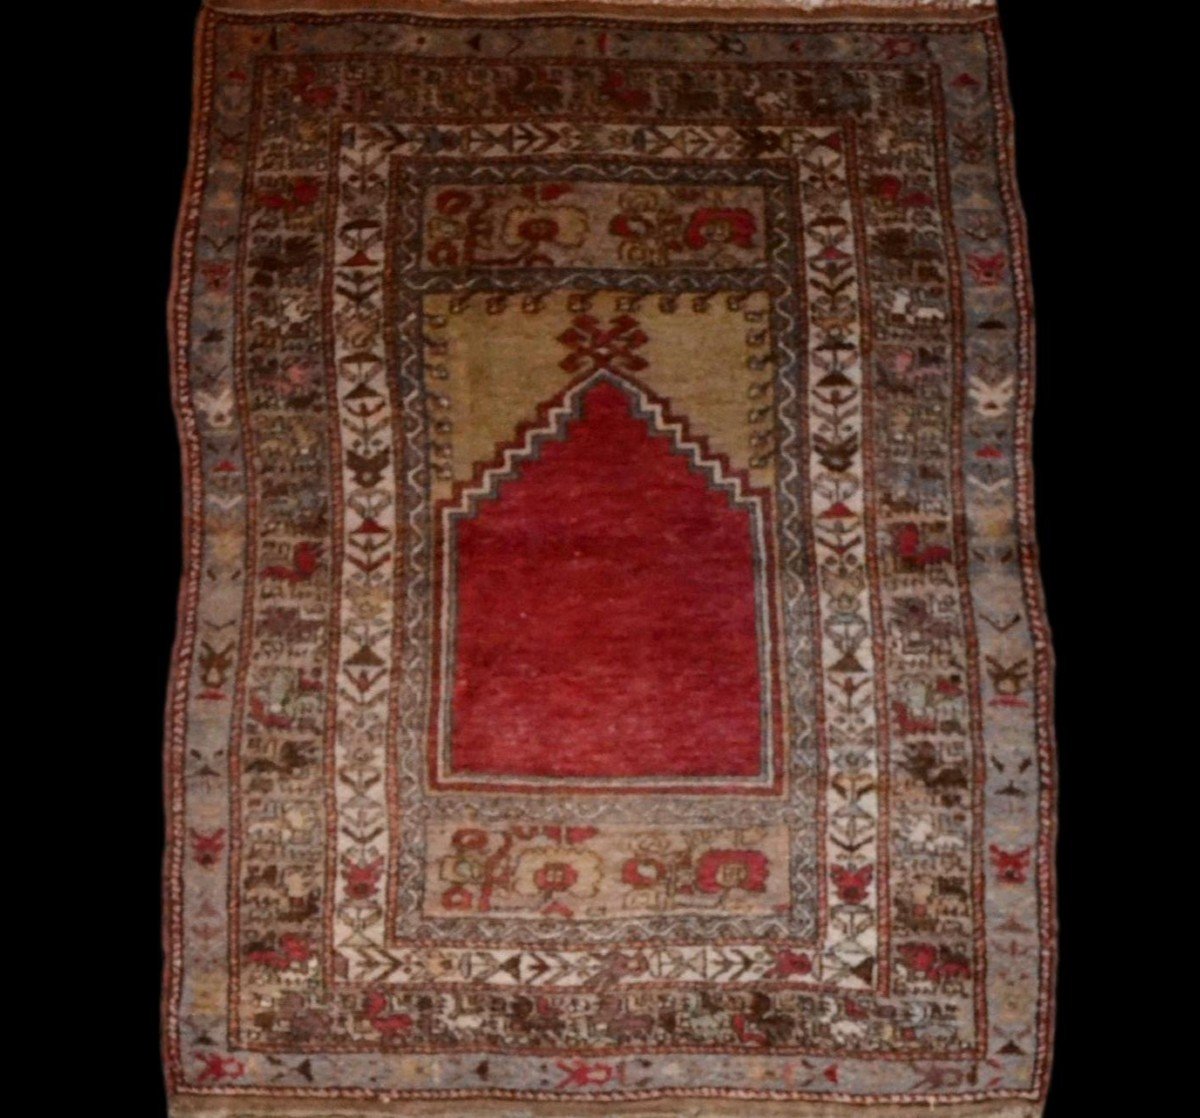 Obruk Rug, Yuruk Tribe, 133 X 174 Cm, Hand-knotted Wool On Wool Circa 1900, Konya Region